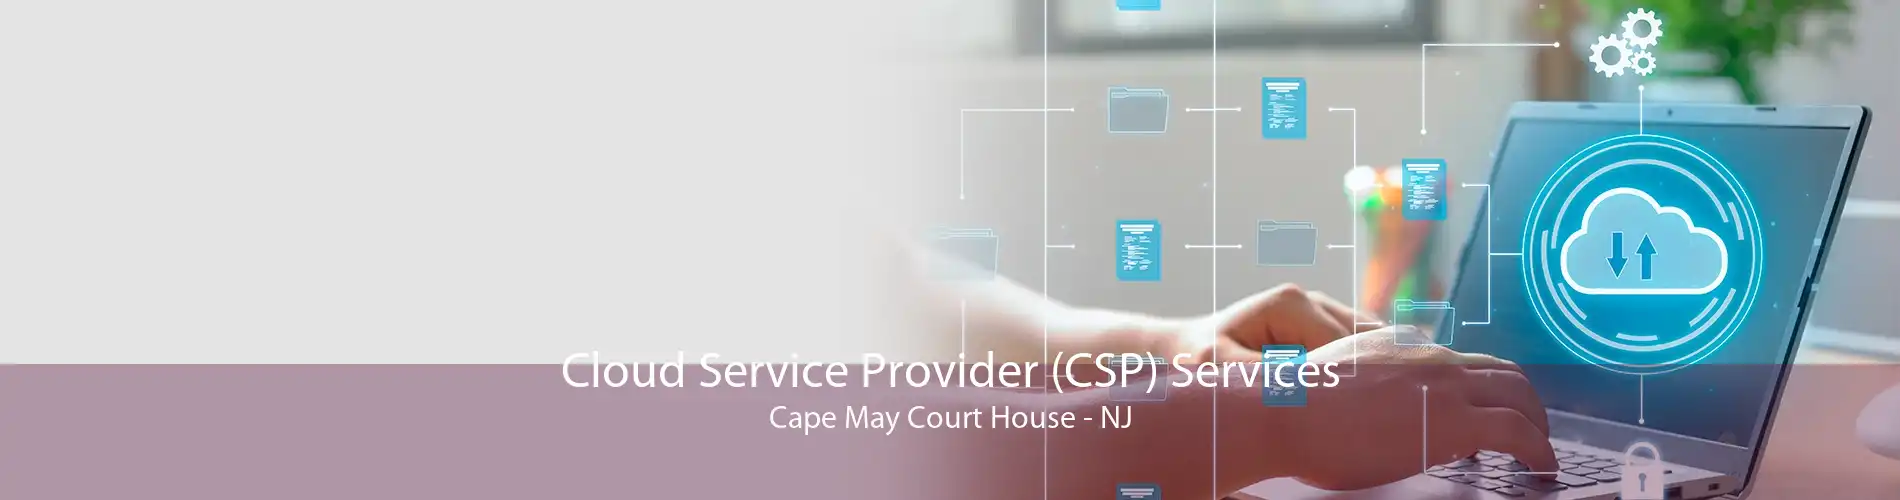 Cloud Service Provider (CSP) Services Cape May Court House - NJ